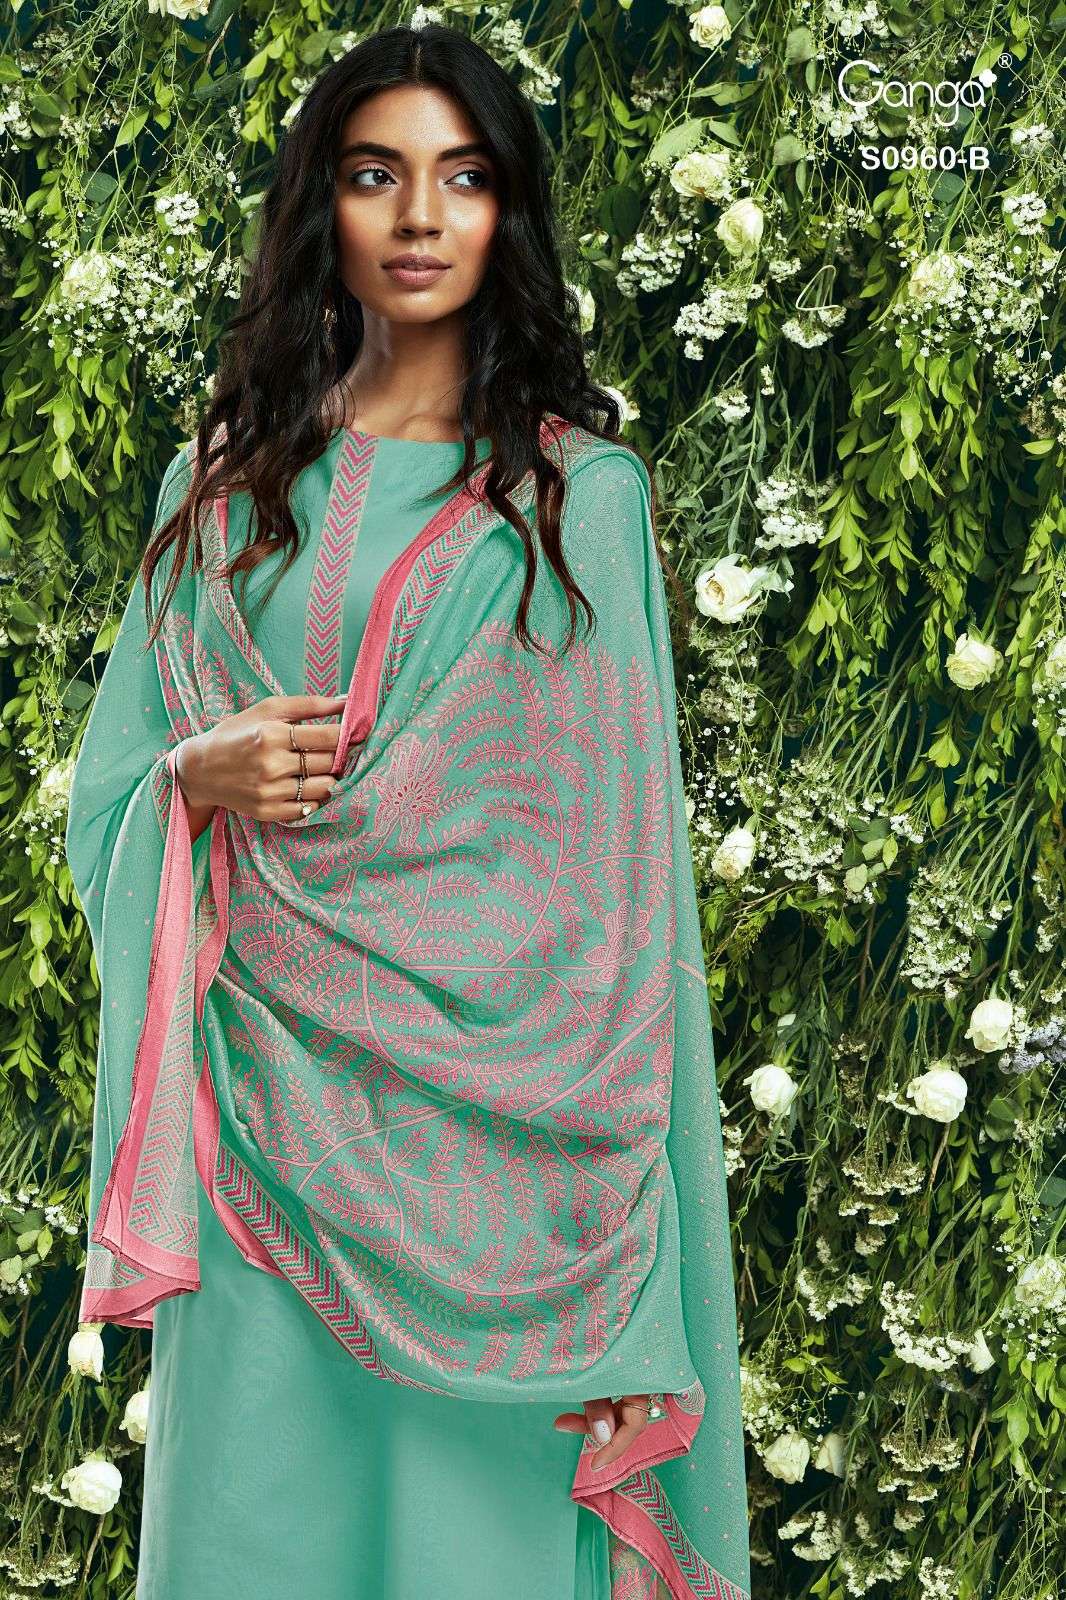 ganga heny 960 series premium cotton designer salwar suits wholesale price surat